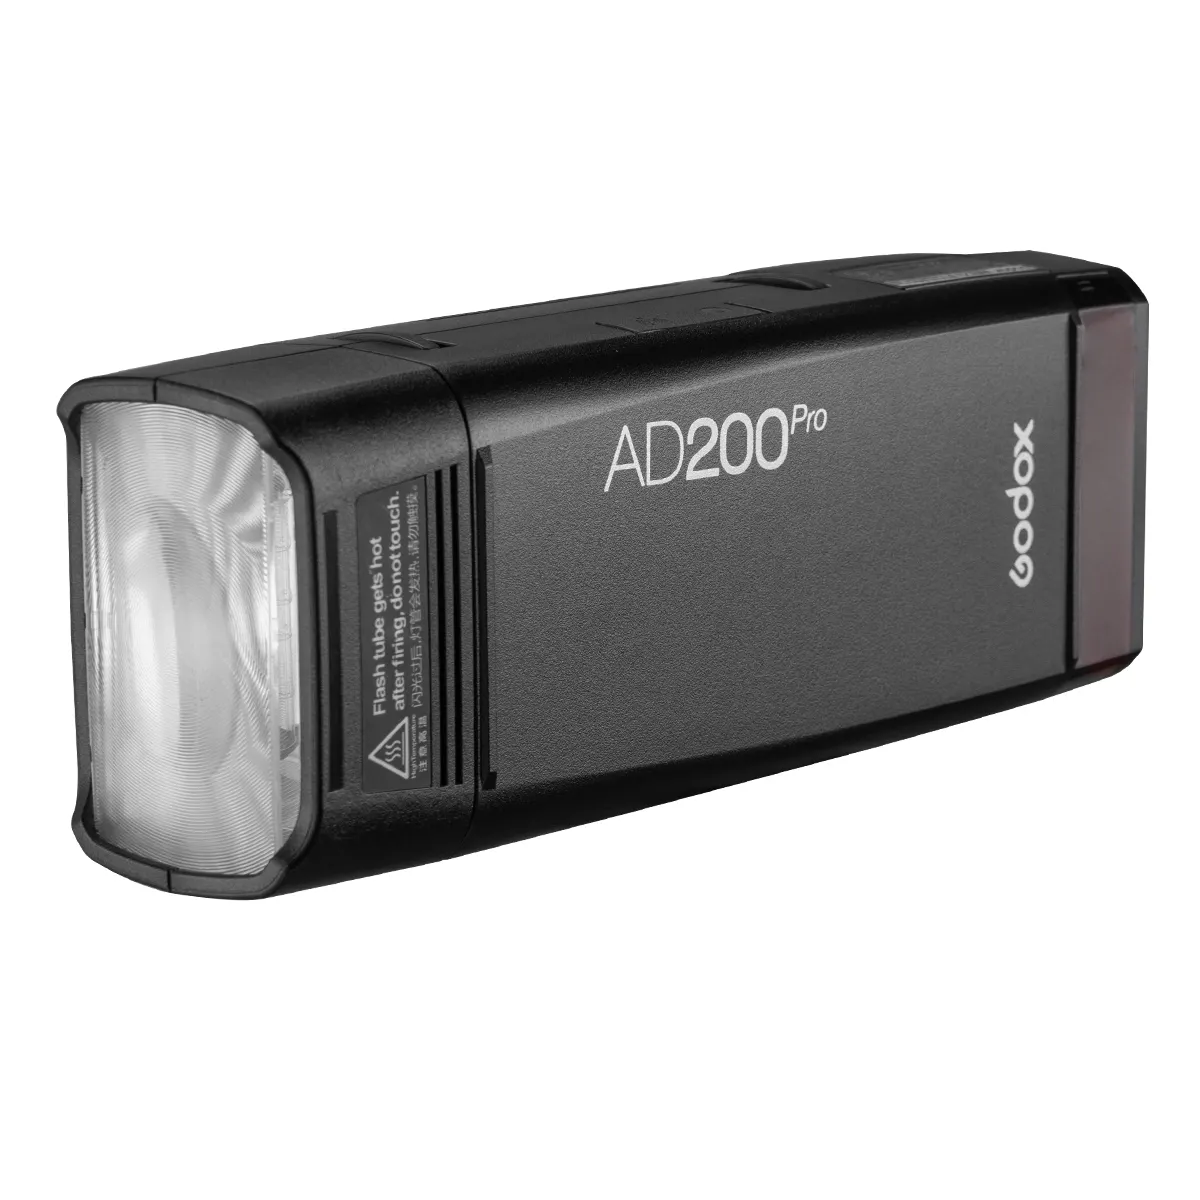 Godox-Flash estroboscópico AD200 Pro, 200Ws, 2,4G, batería de 2900mAh, Bombilla desnuda, cabezal Speedlite Fresnel para cámara DSLR, Speedlight